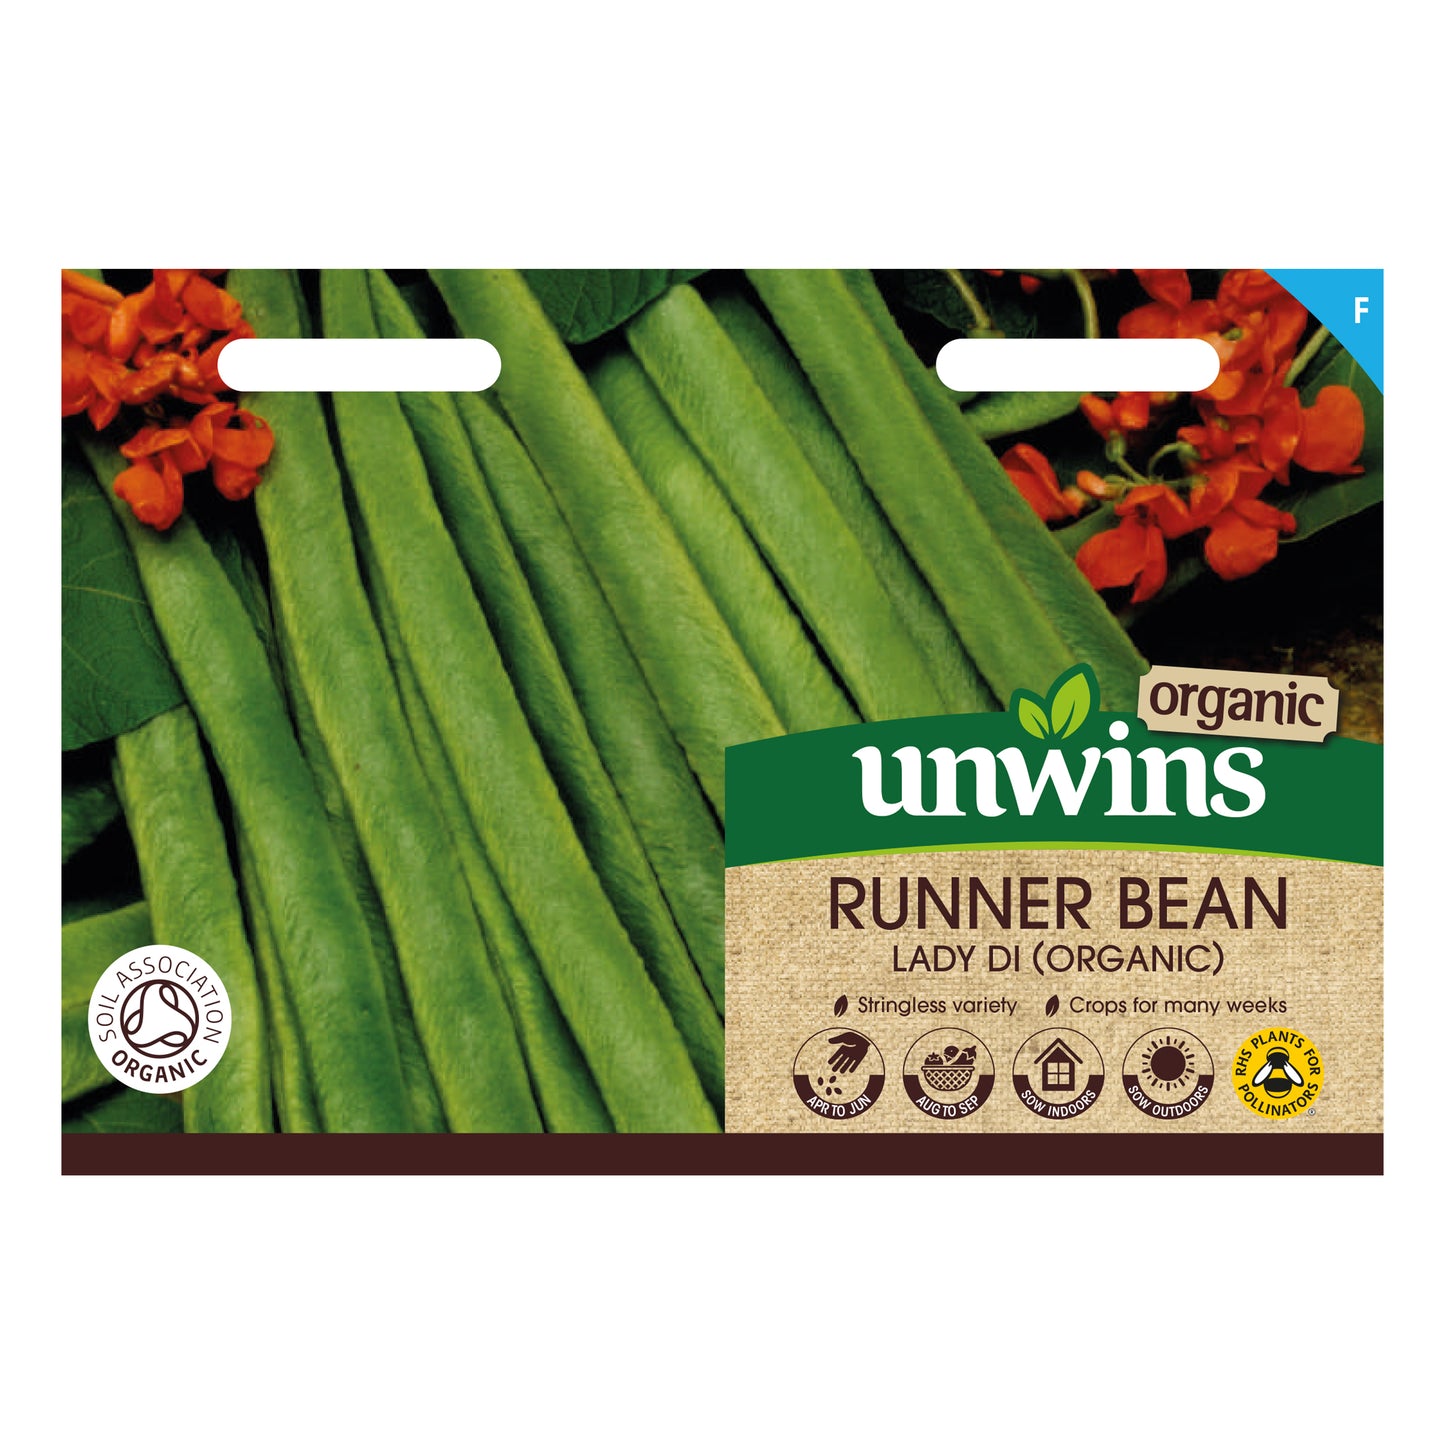 Unwins Organic Runner Bean Lady Di Seeds front of pack